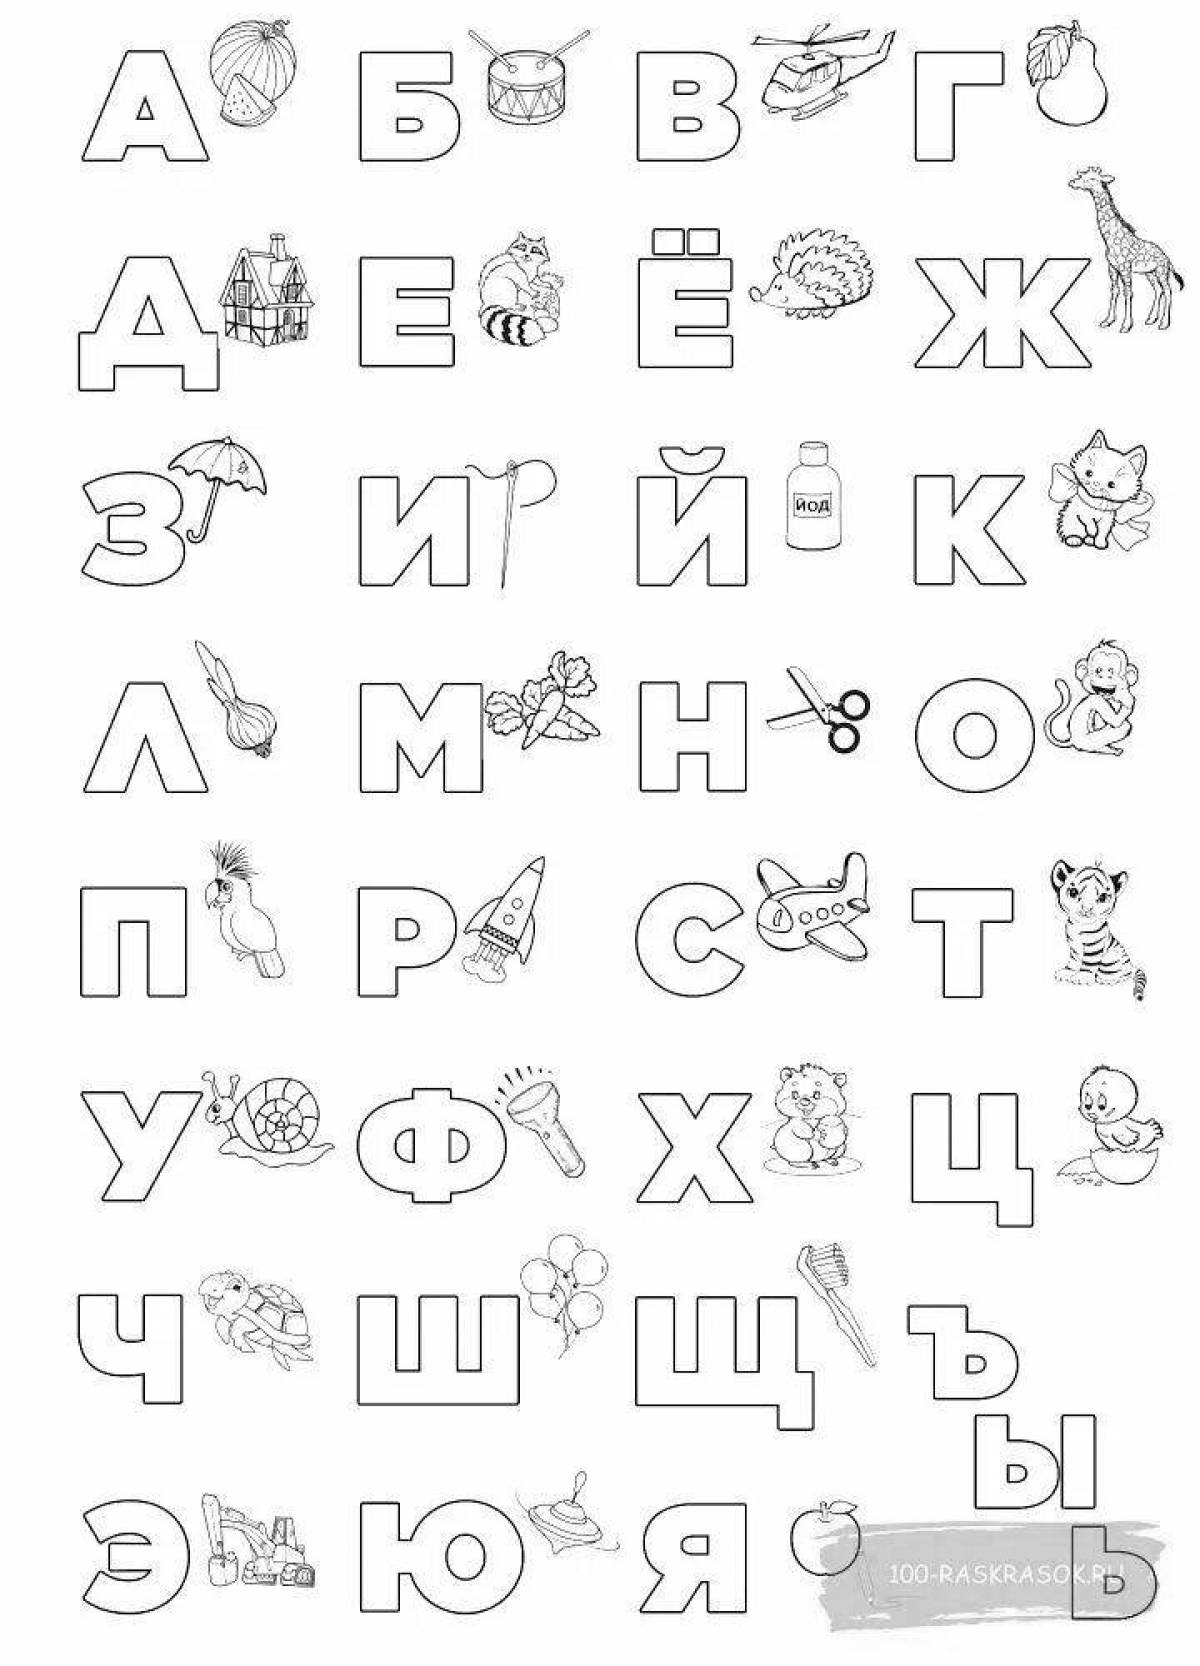 Alphabet for children 5 6 years old #23